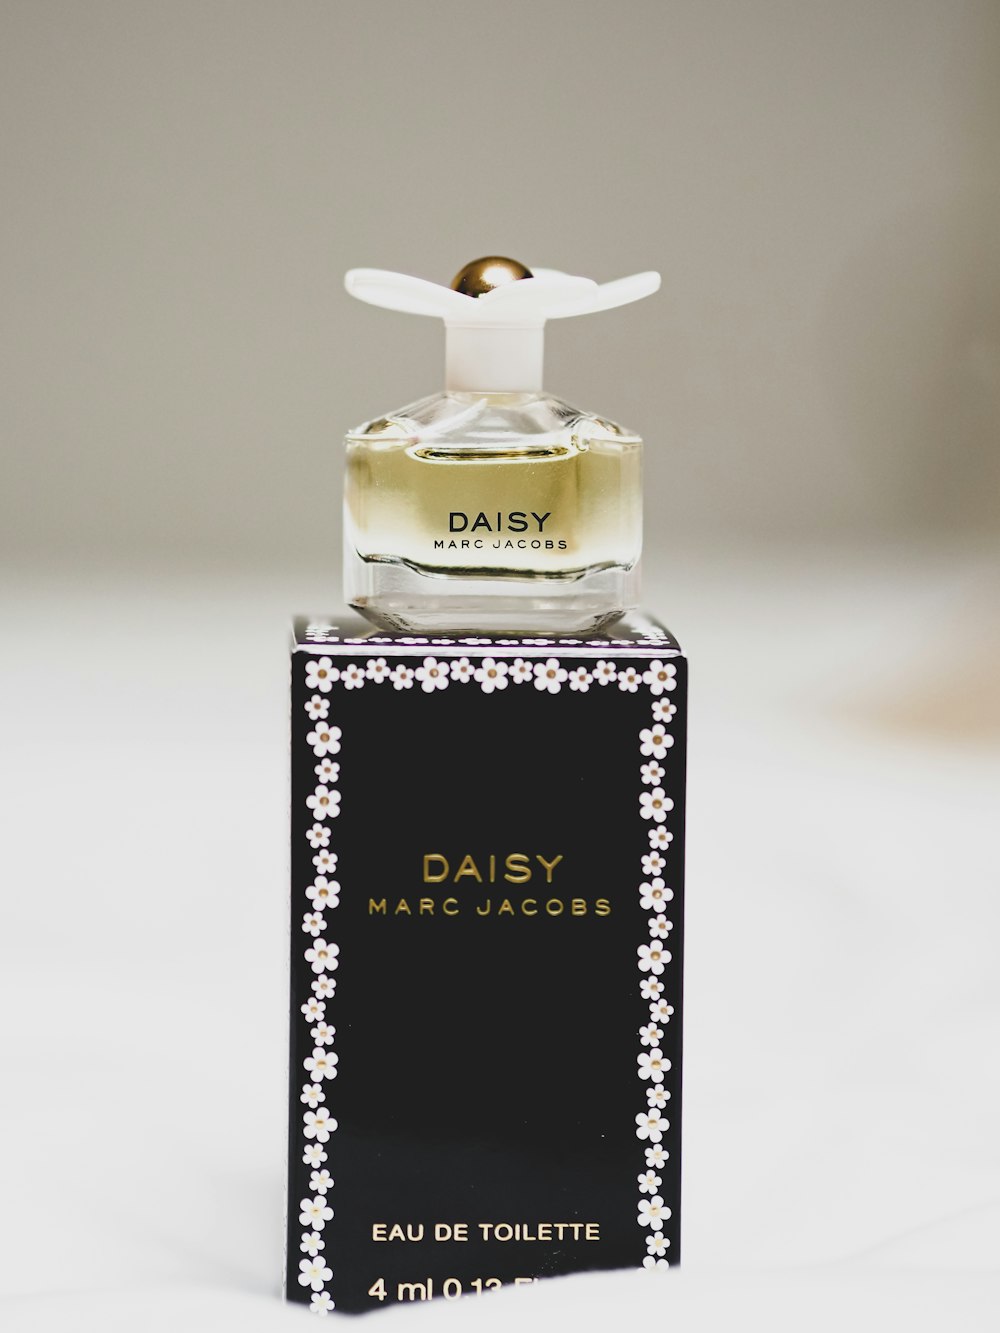 Calvin klein one perfume bottle photo – Free Fashion Image on Unsplash